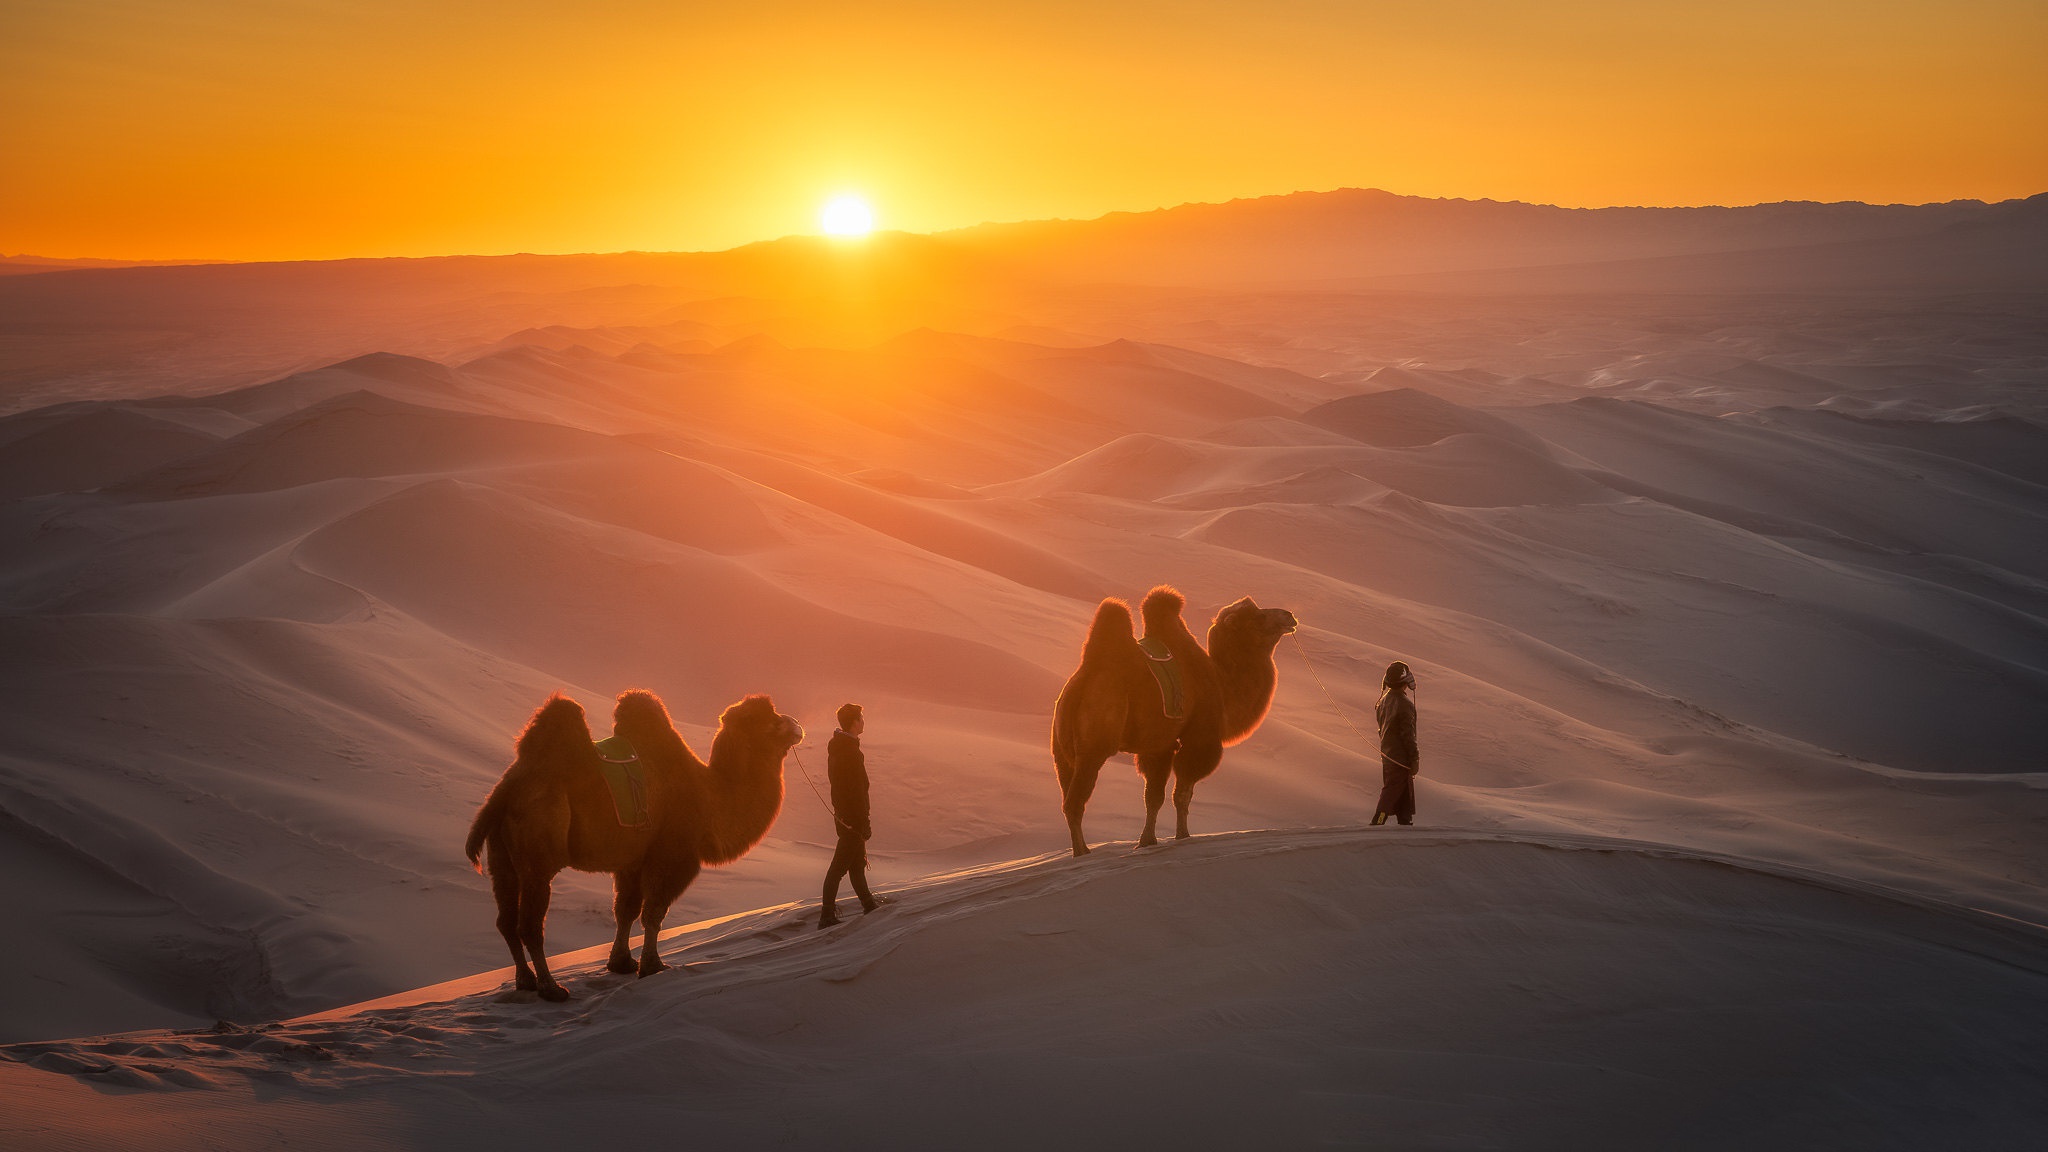 Караван солнца. Бедуин на верблюде. Караван Мекка пустыня. Верблюд в пустыне. Караван в пустыне.